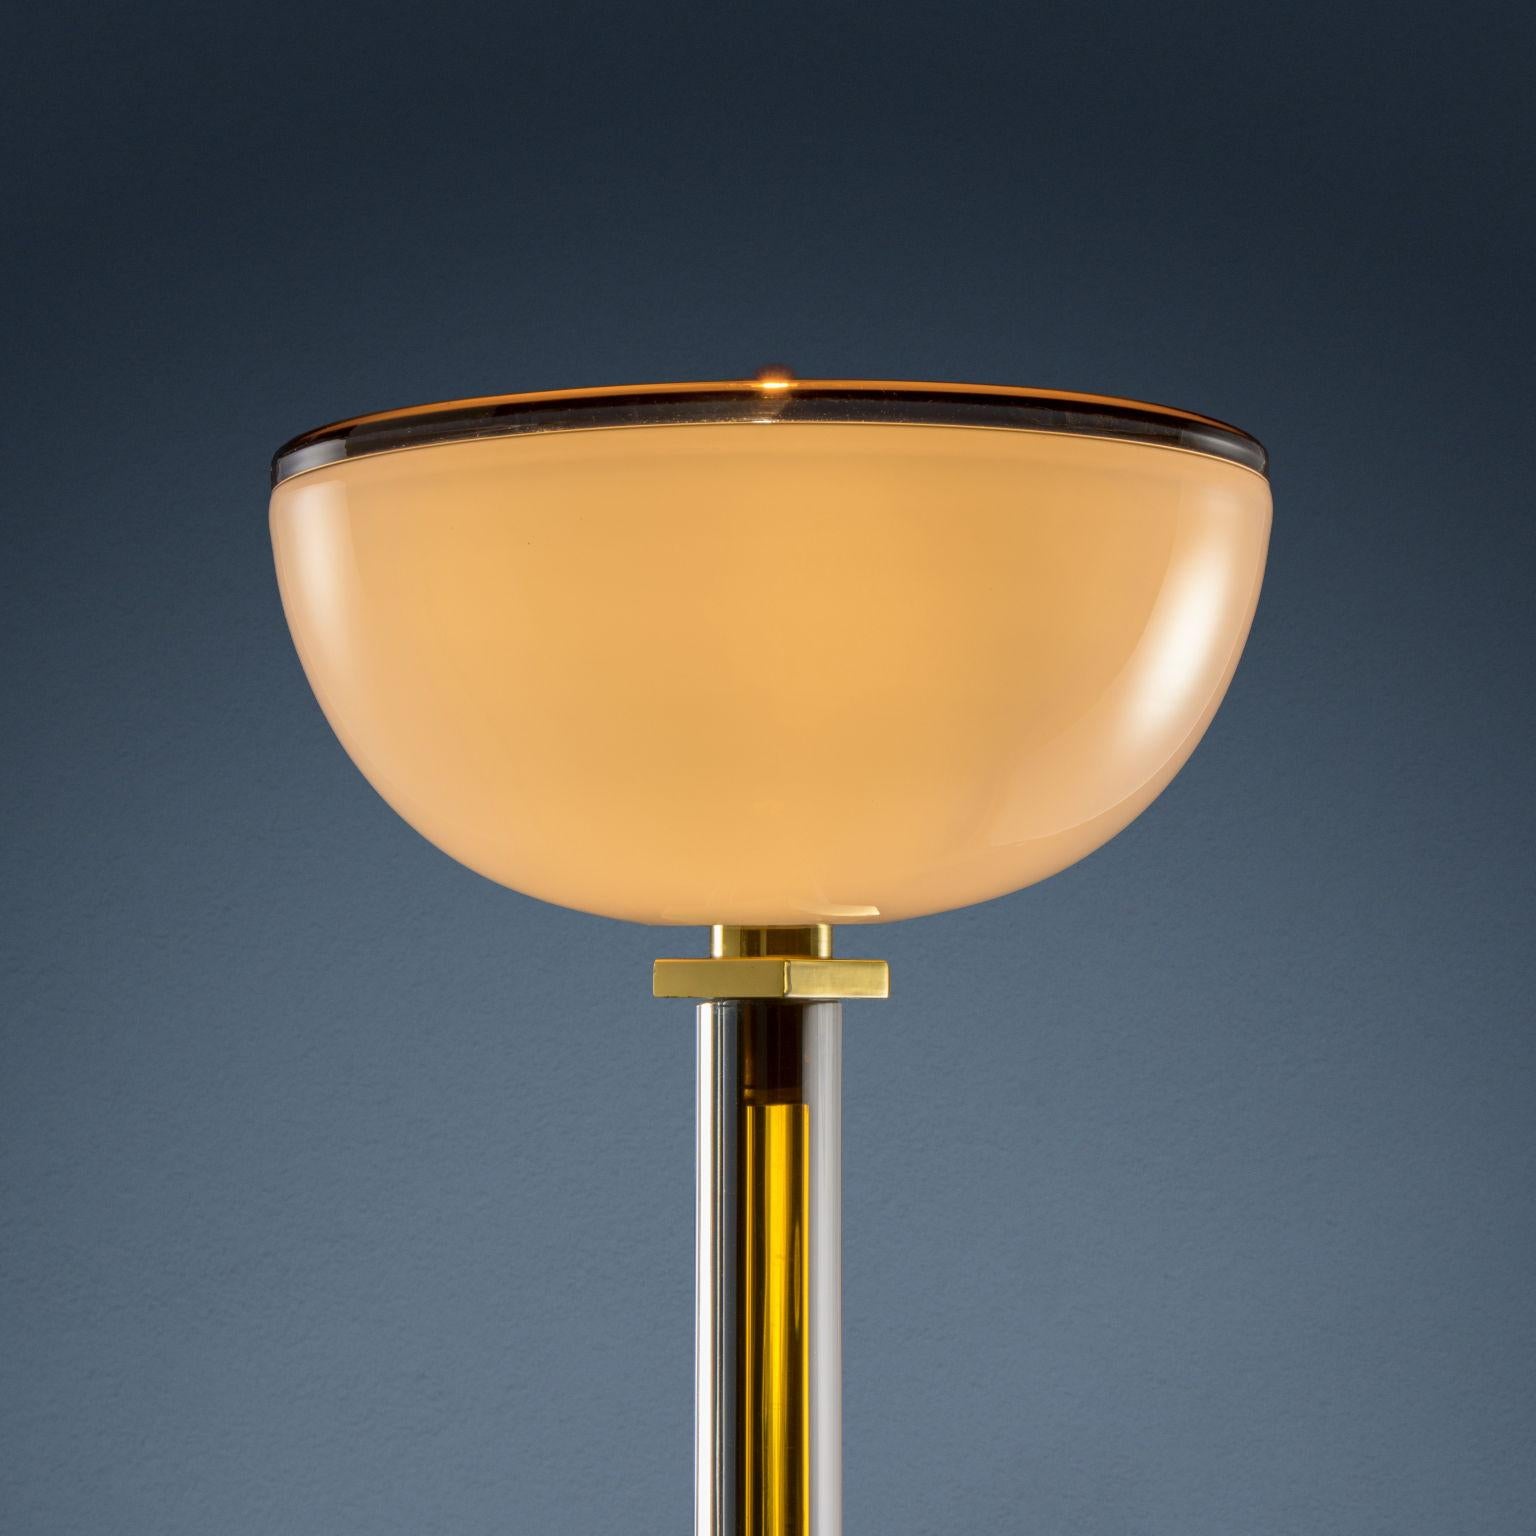 Italian 'Tolboi' Venini lamp from the 80s